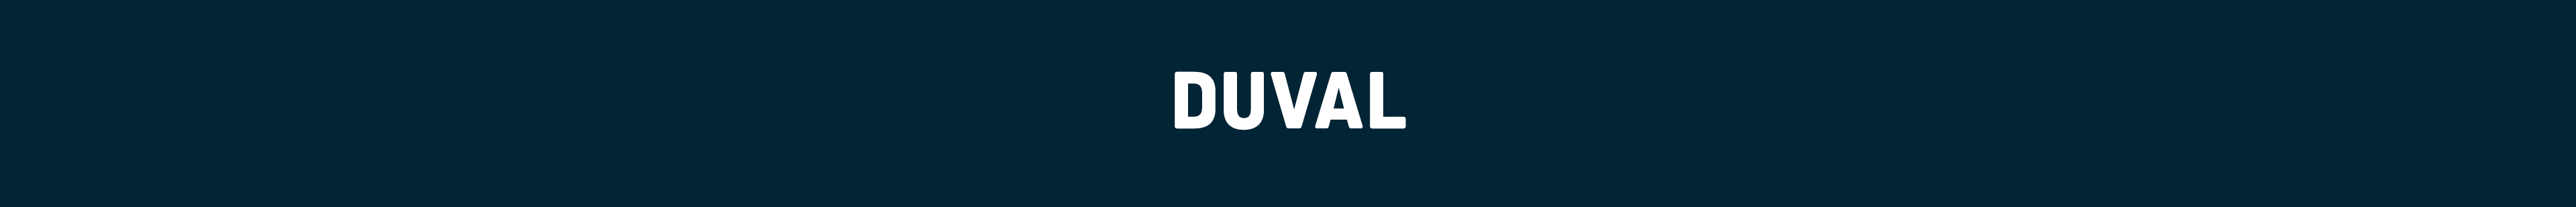 Duval.jpg